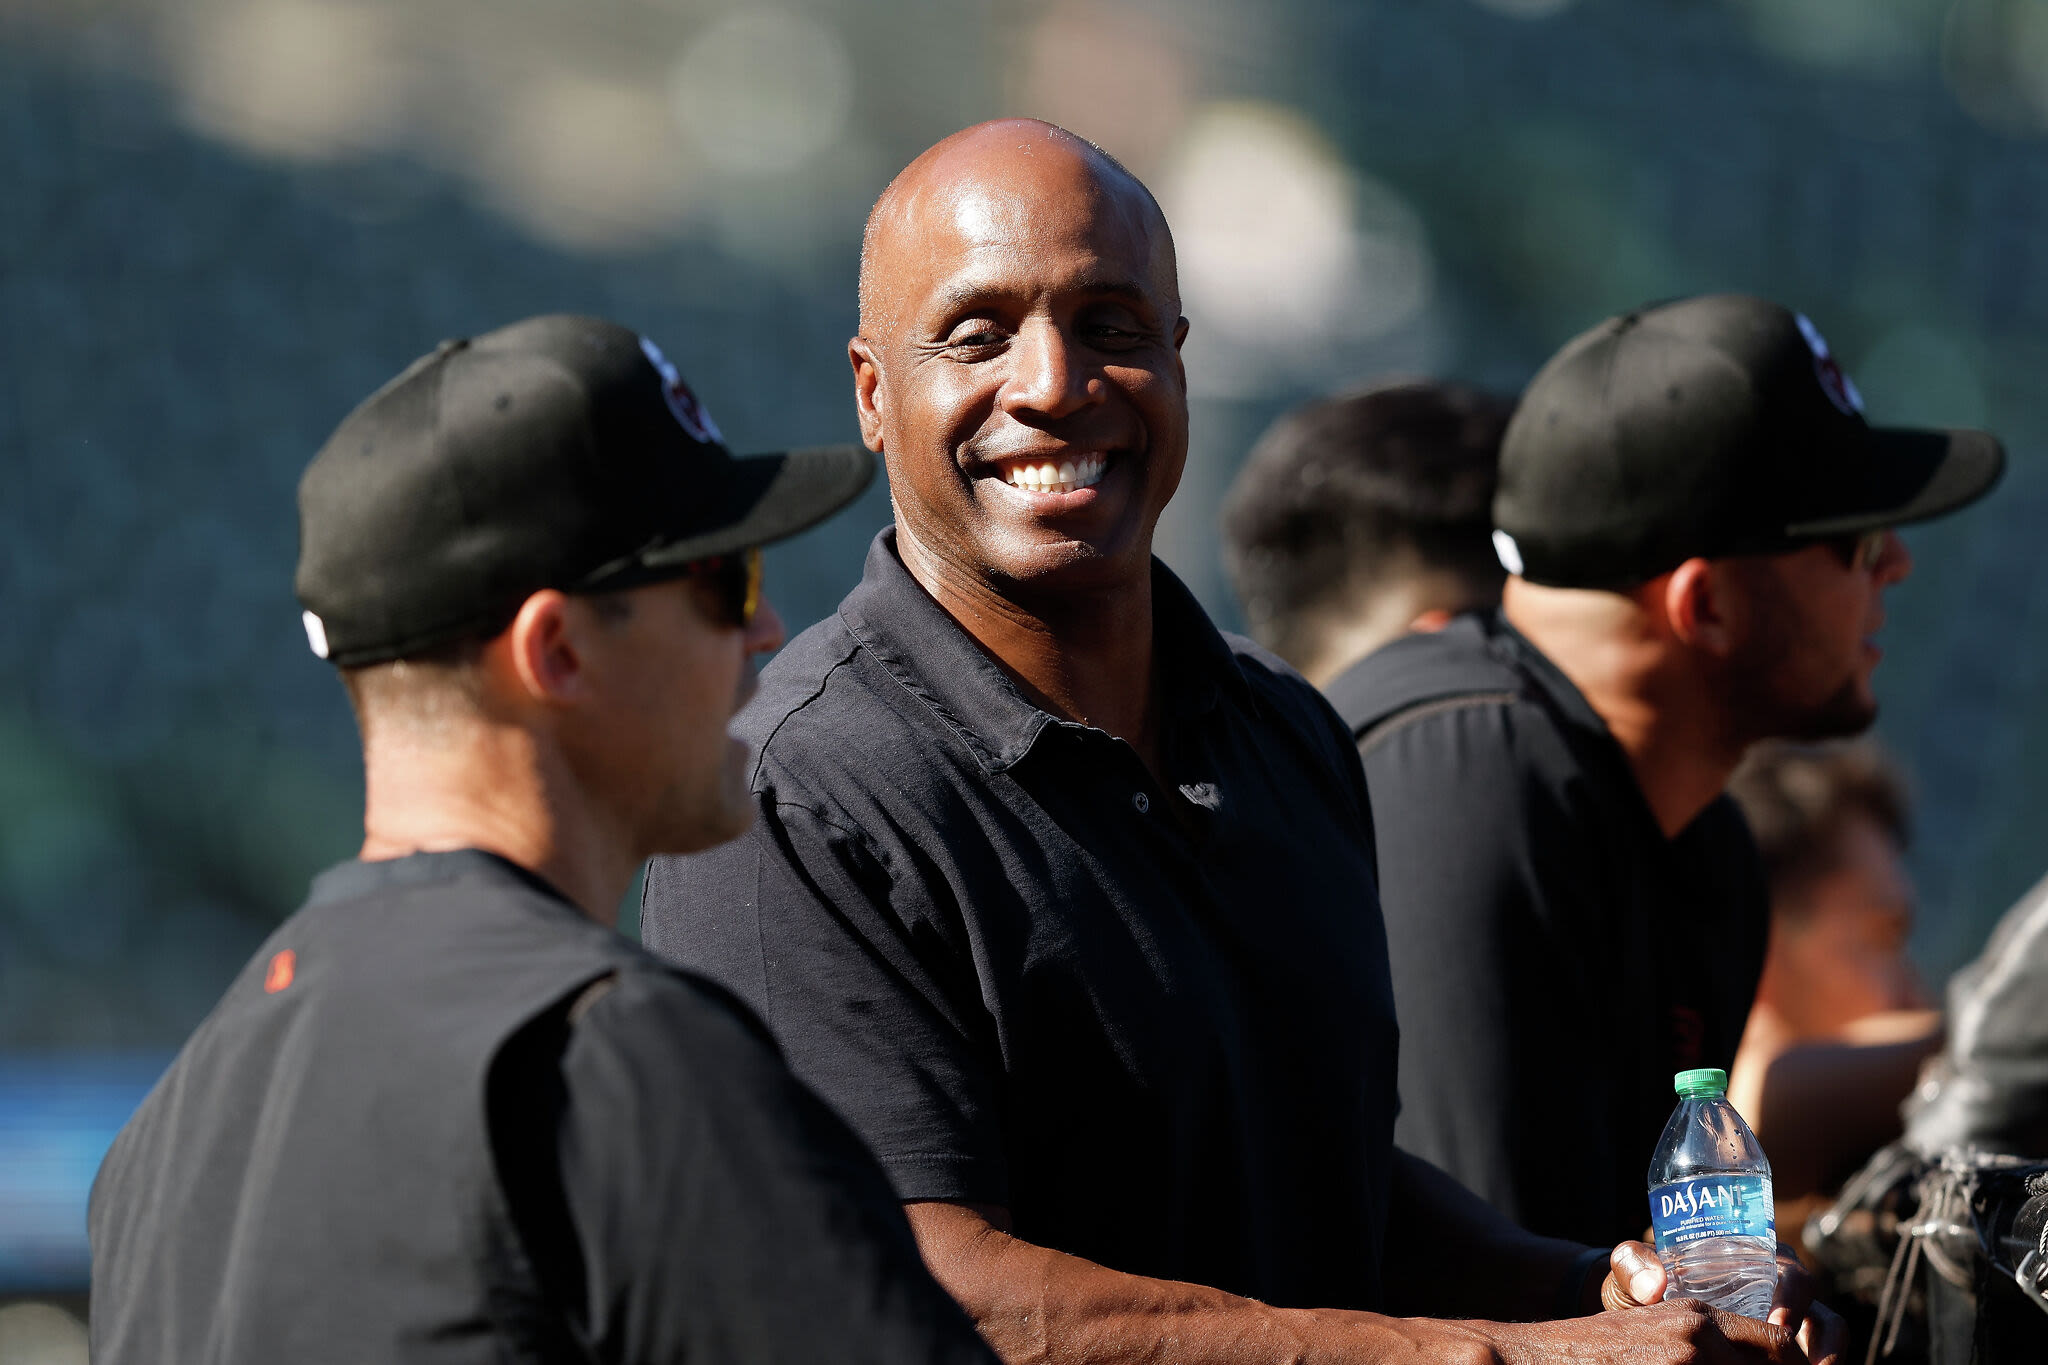 SF Giants legend Barry Bonds to lead celebrity softball team at Rickwood Field